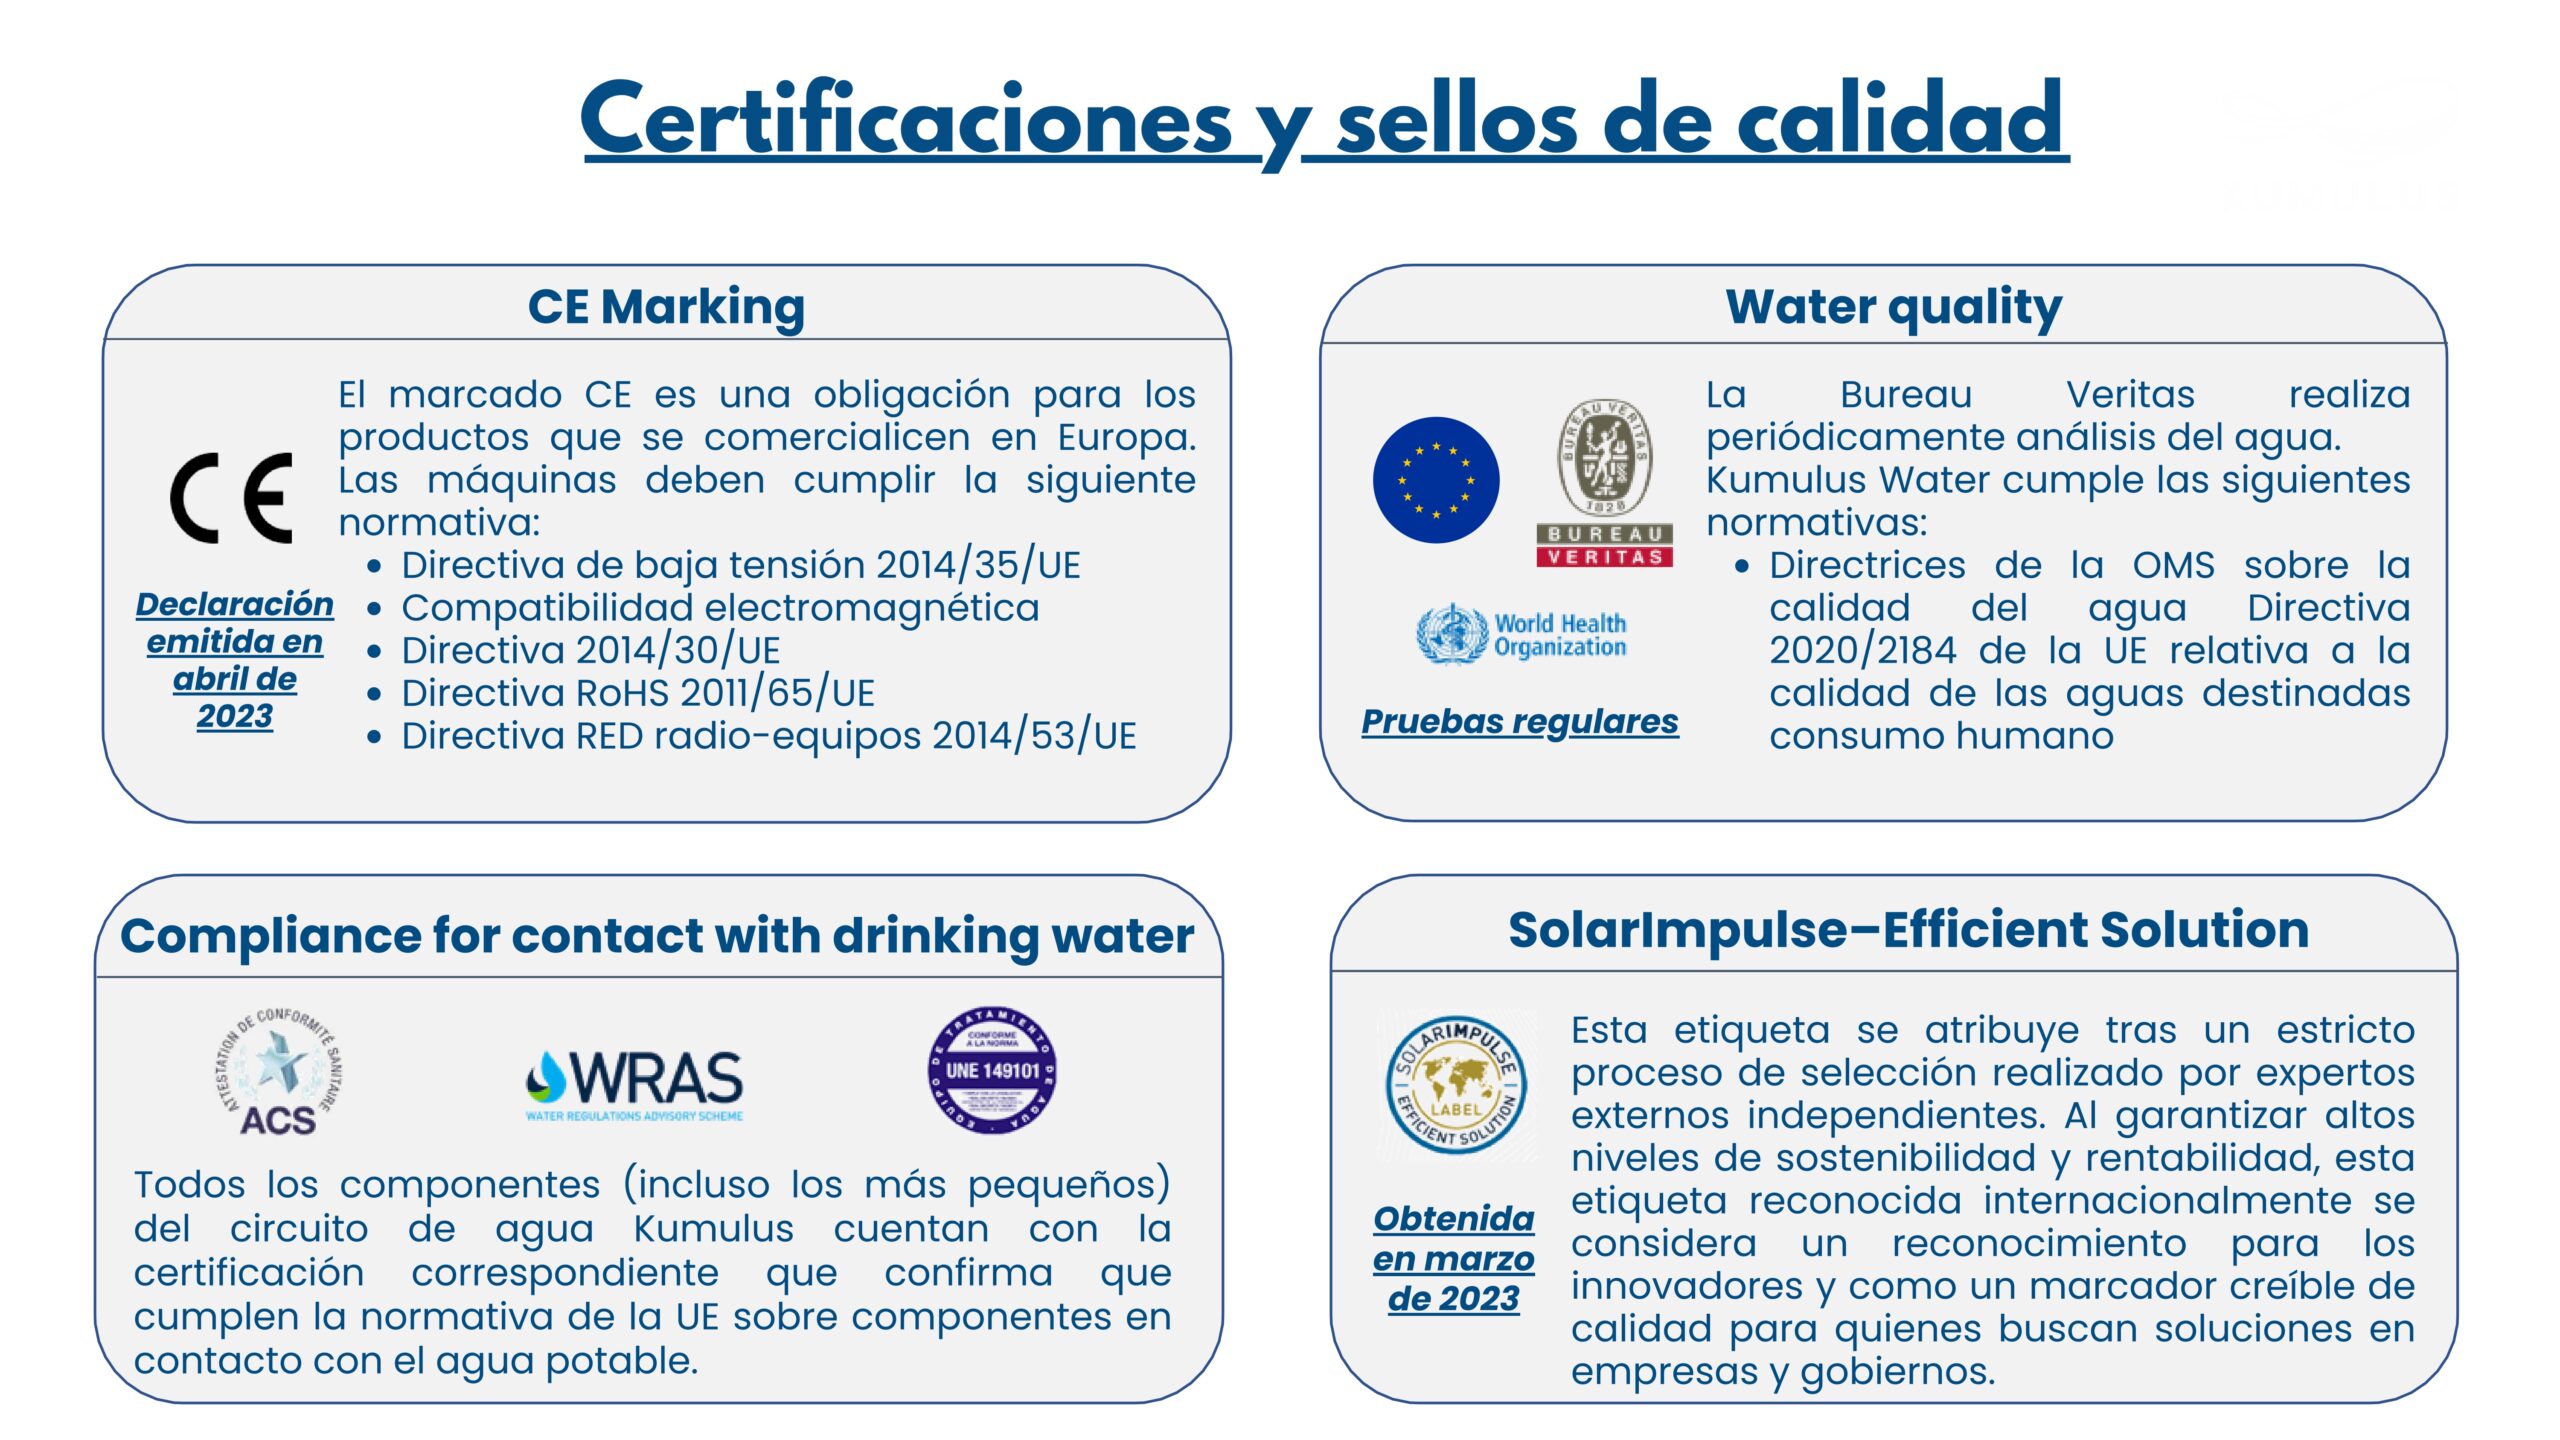 Hydrologos Valencia - Kumulus Water